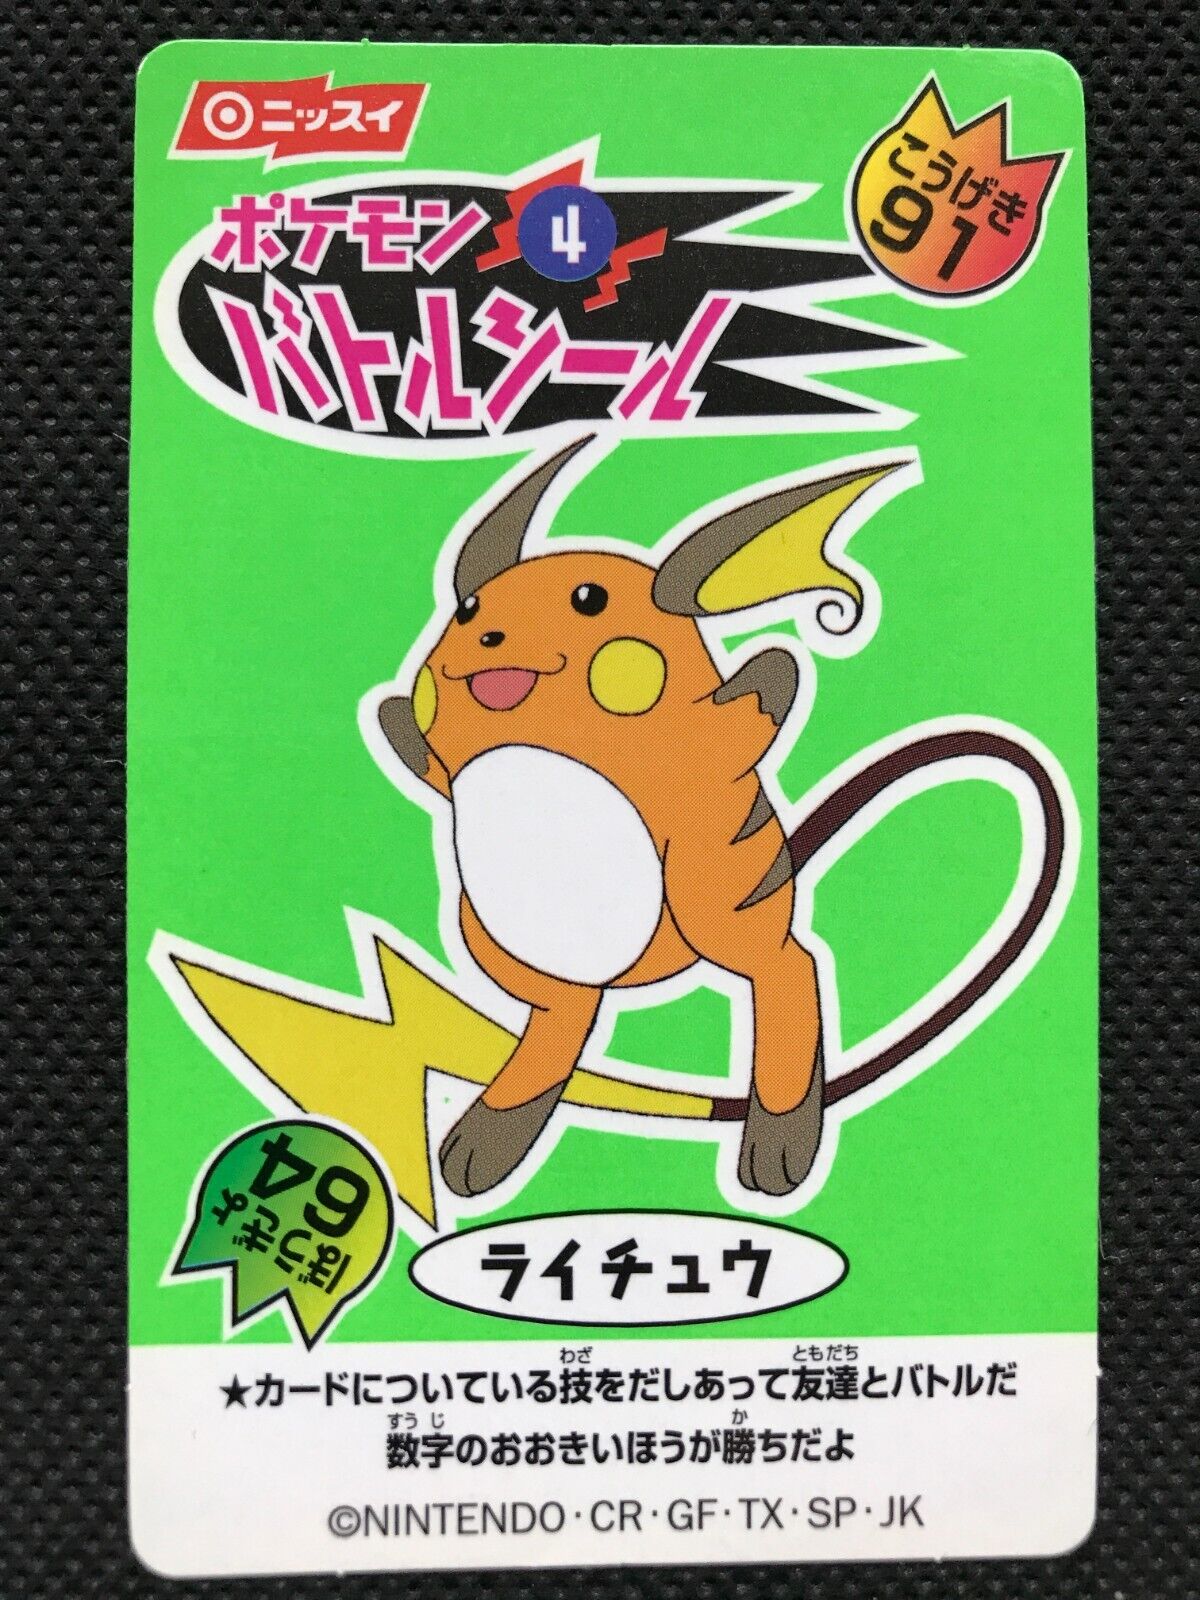 Raichu Pokemon Battle Sticker Seal 4 Japanese NNINTENDO NISSUI Very Rare